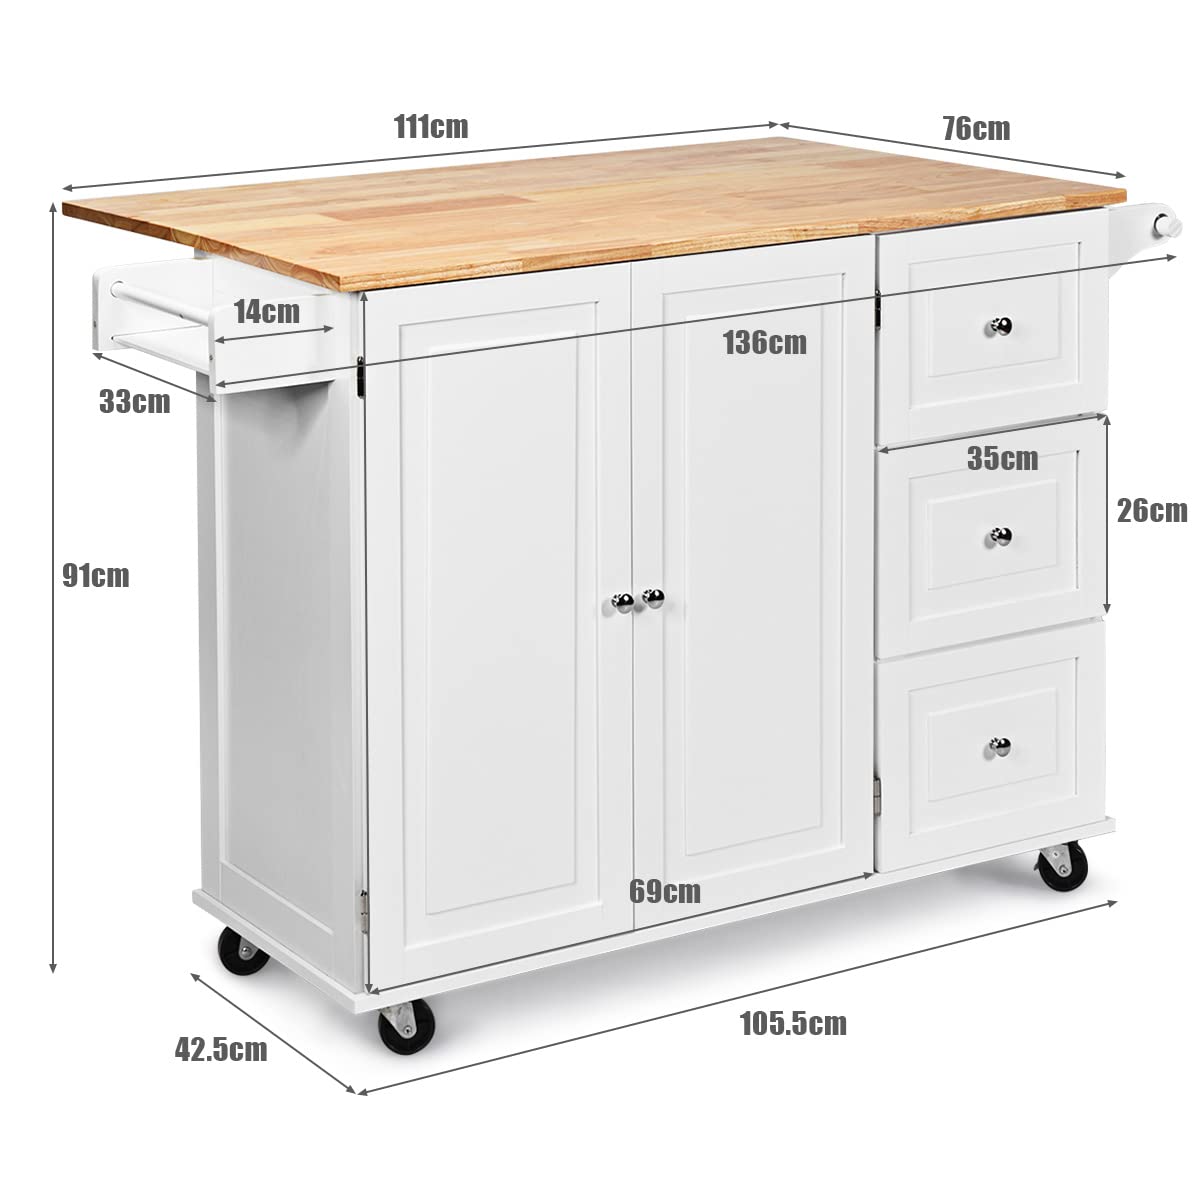 Giantex Kitchen Island Cart, Large Trolley Cart w/ Drop-Leaf Tabletop, Large Cabinet